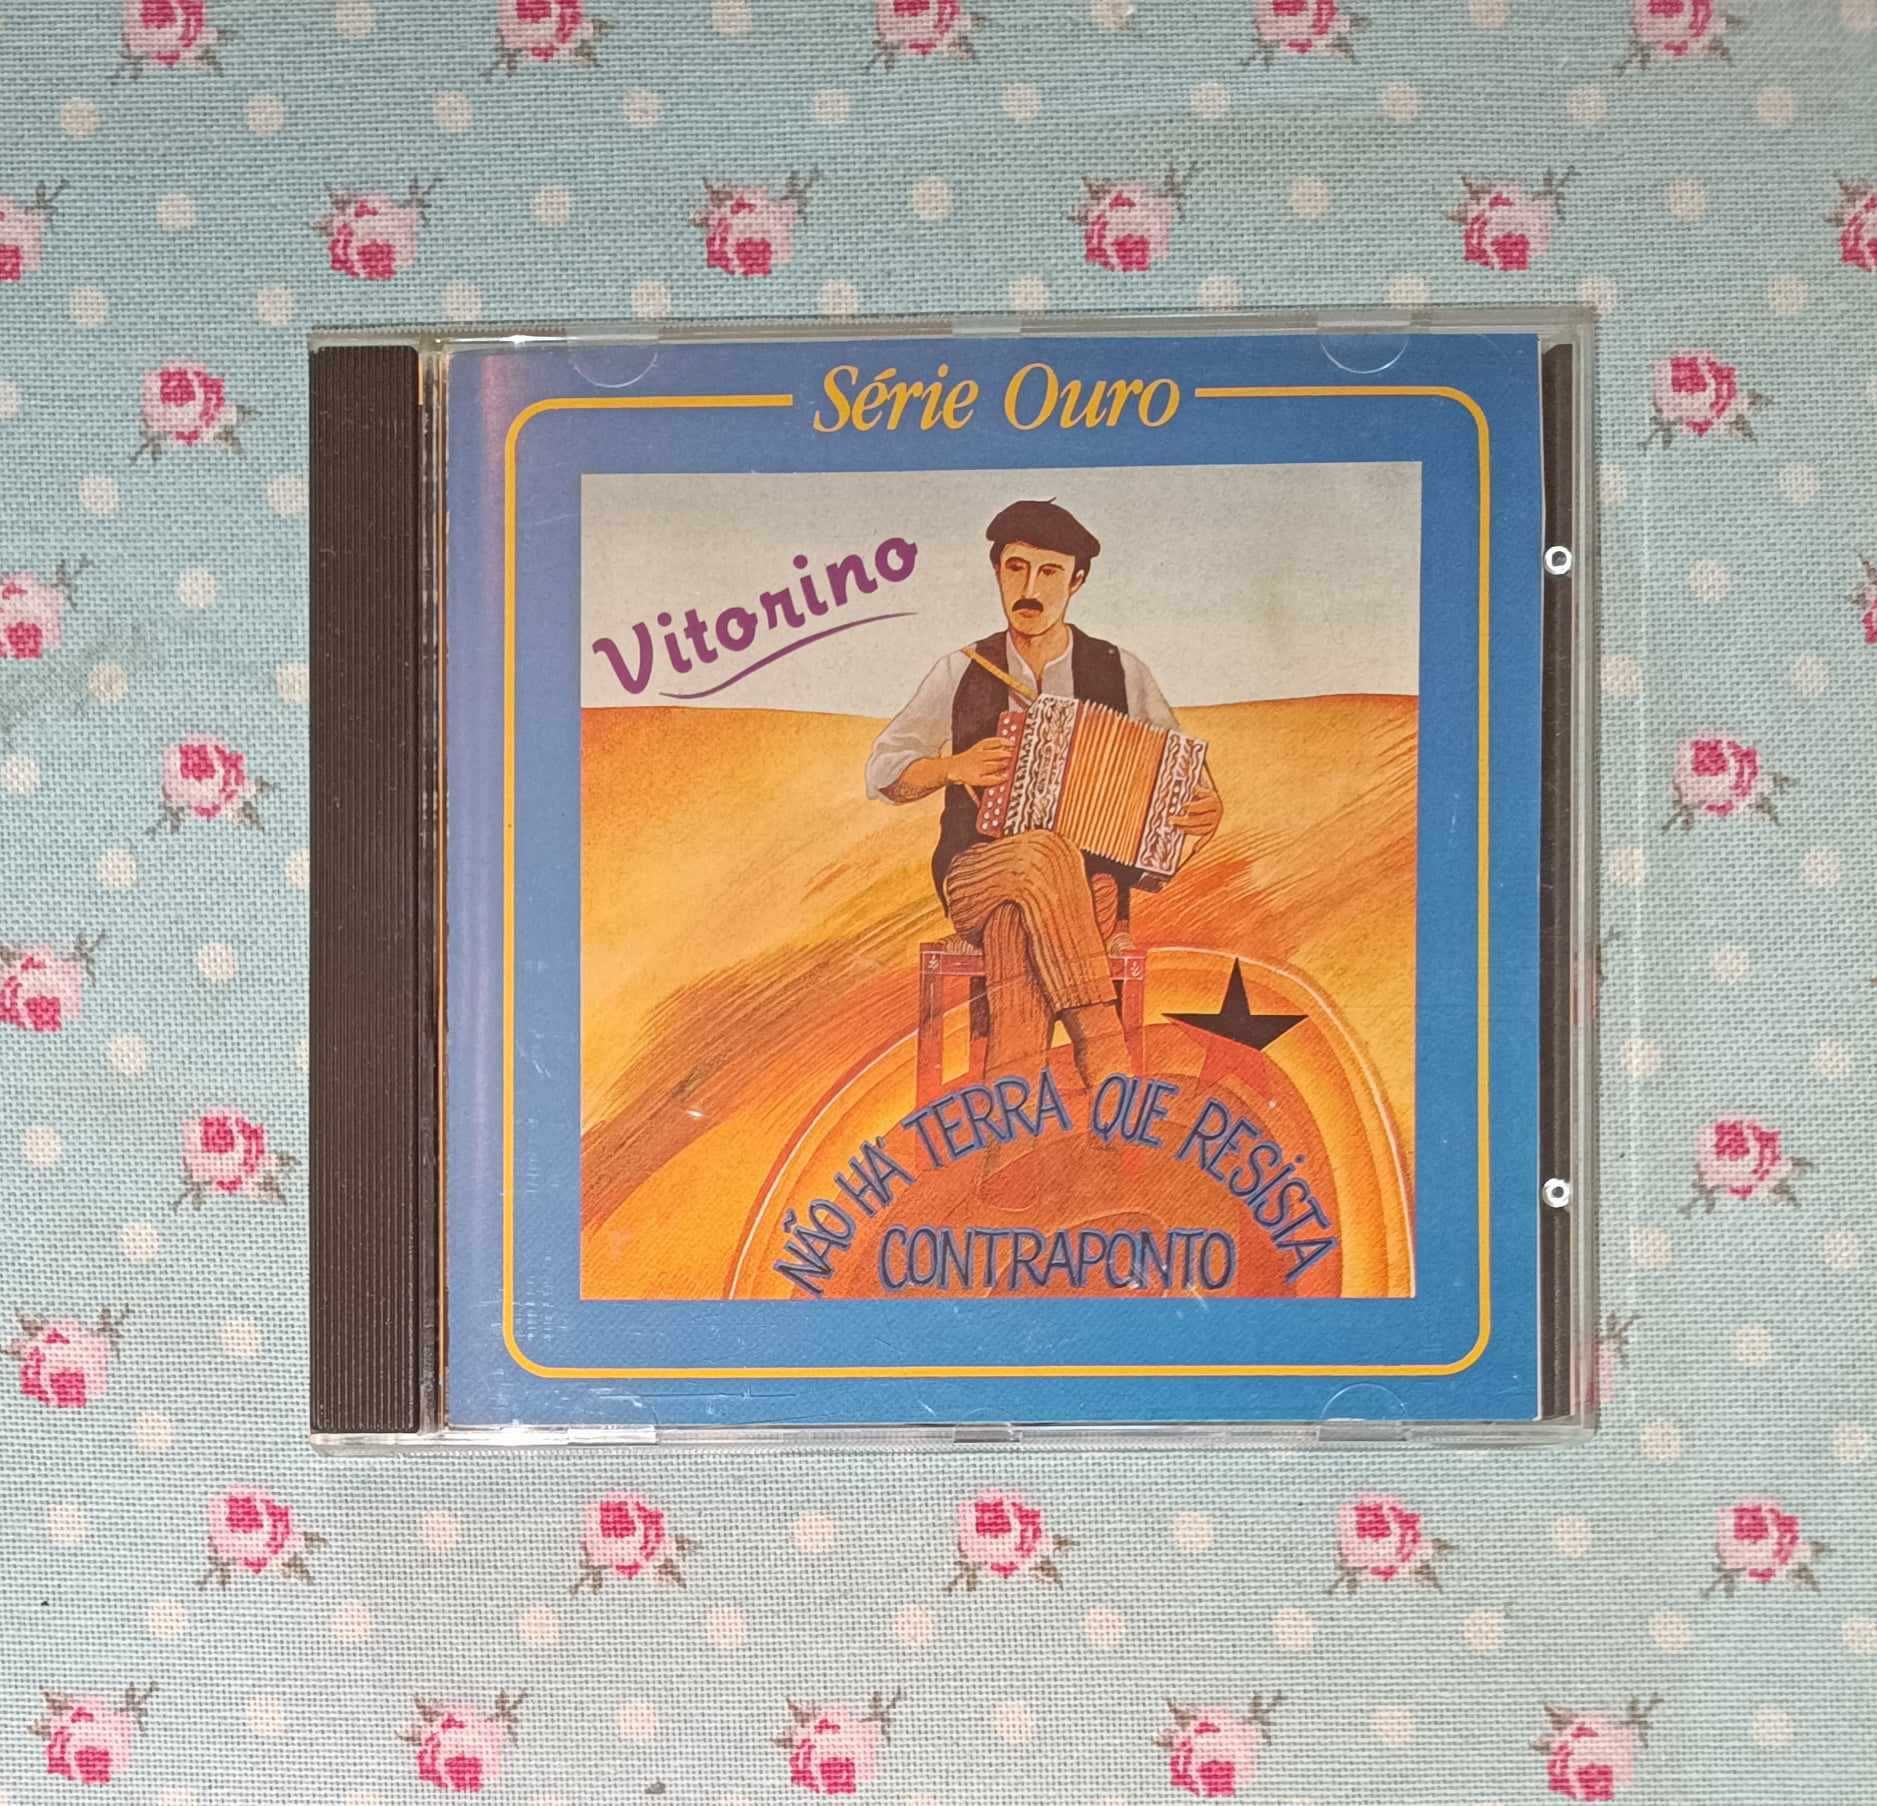 8 CDs do Vitorino